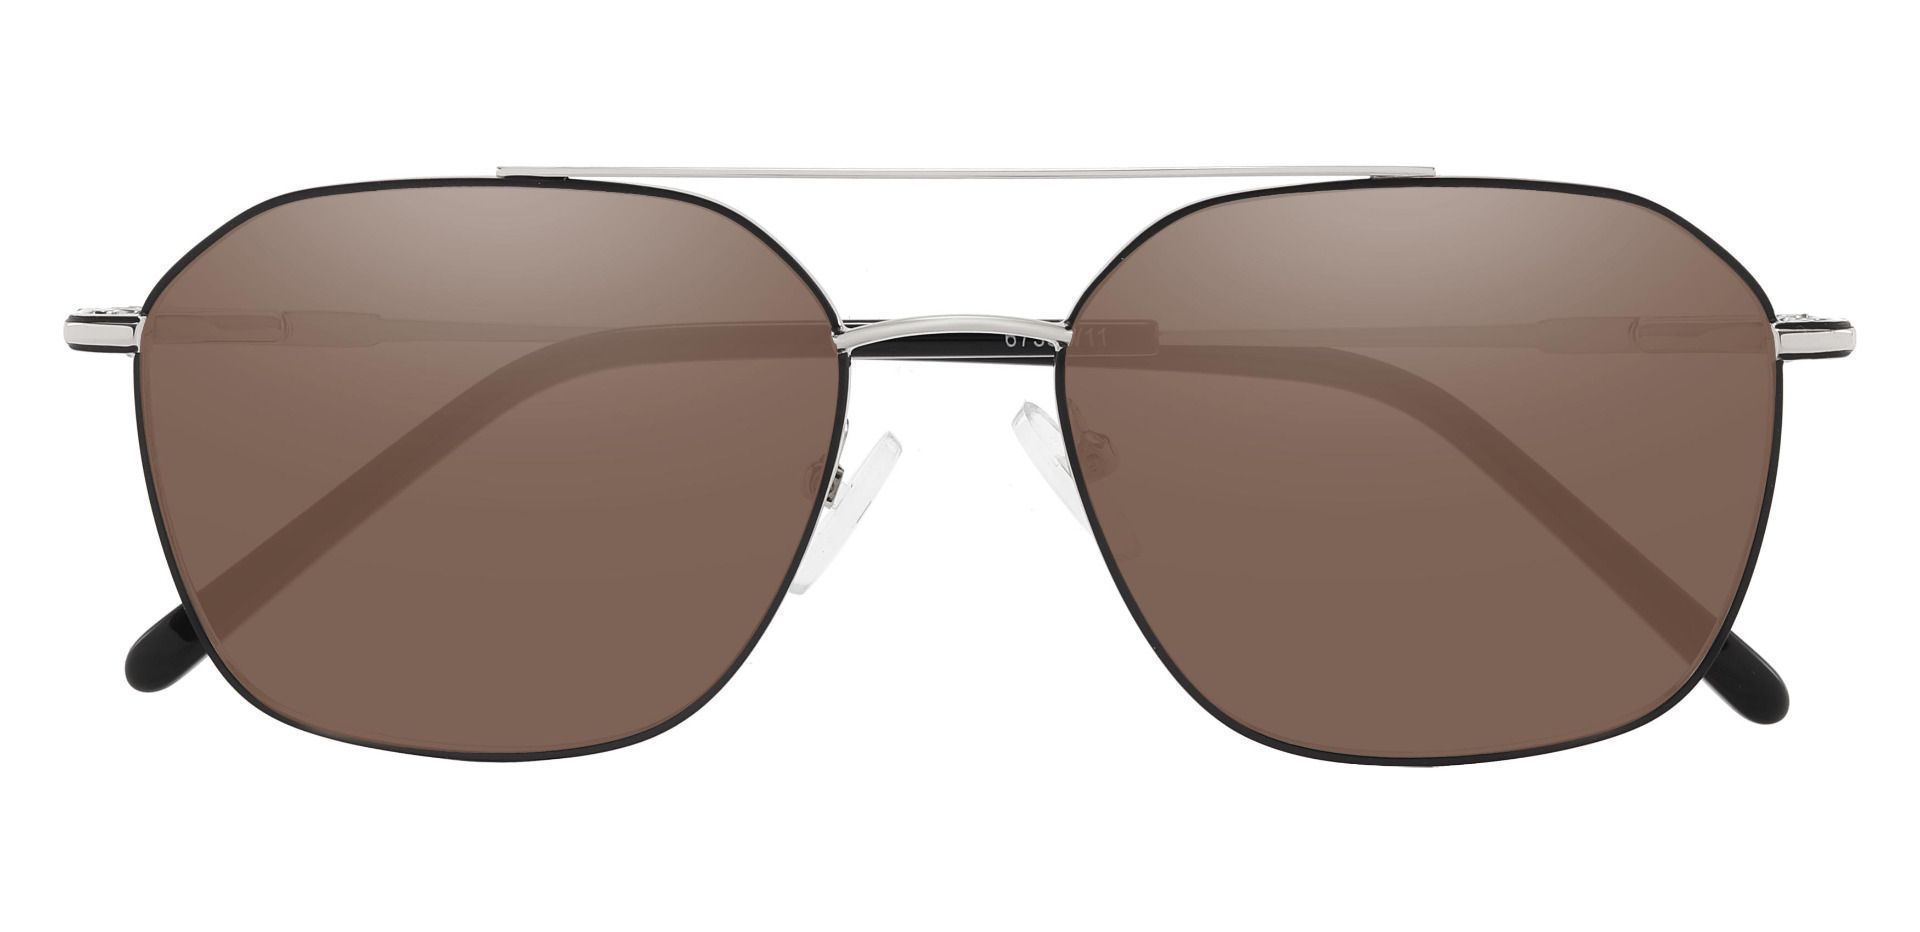 Harvey Aviator Progressive Sunglasses - Silver Frame With Brown Lenses